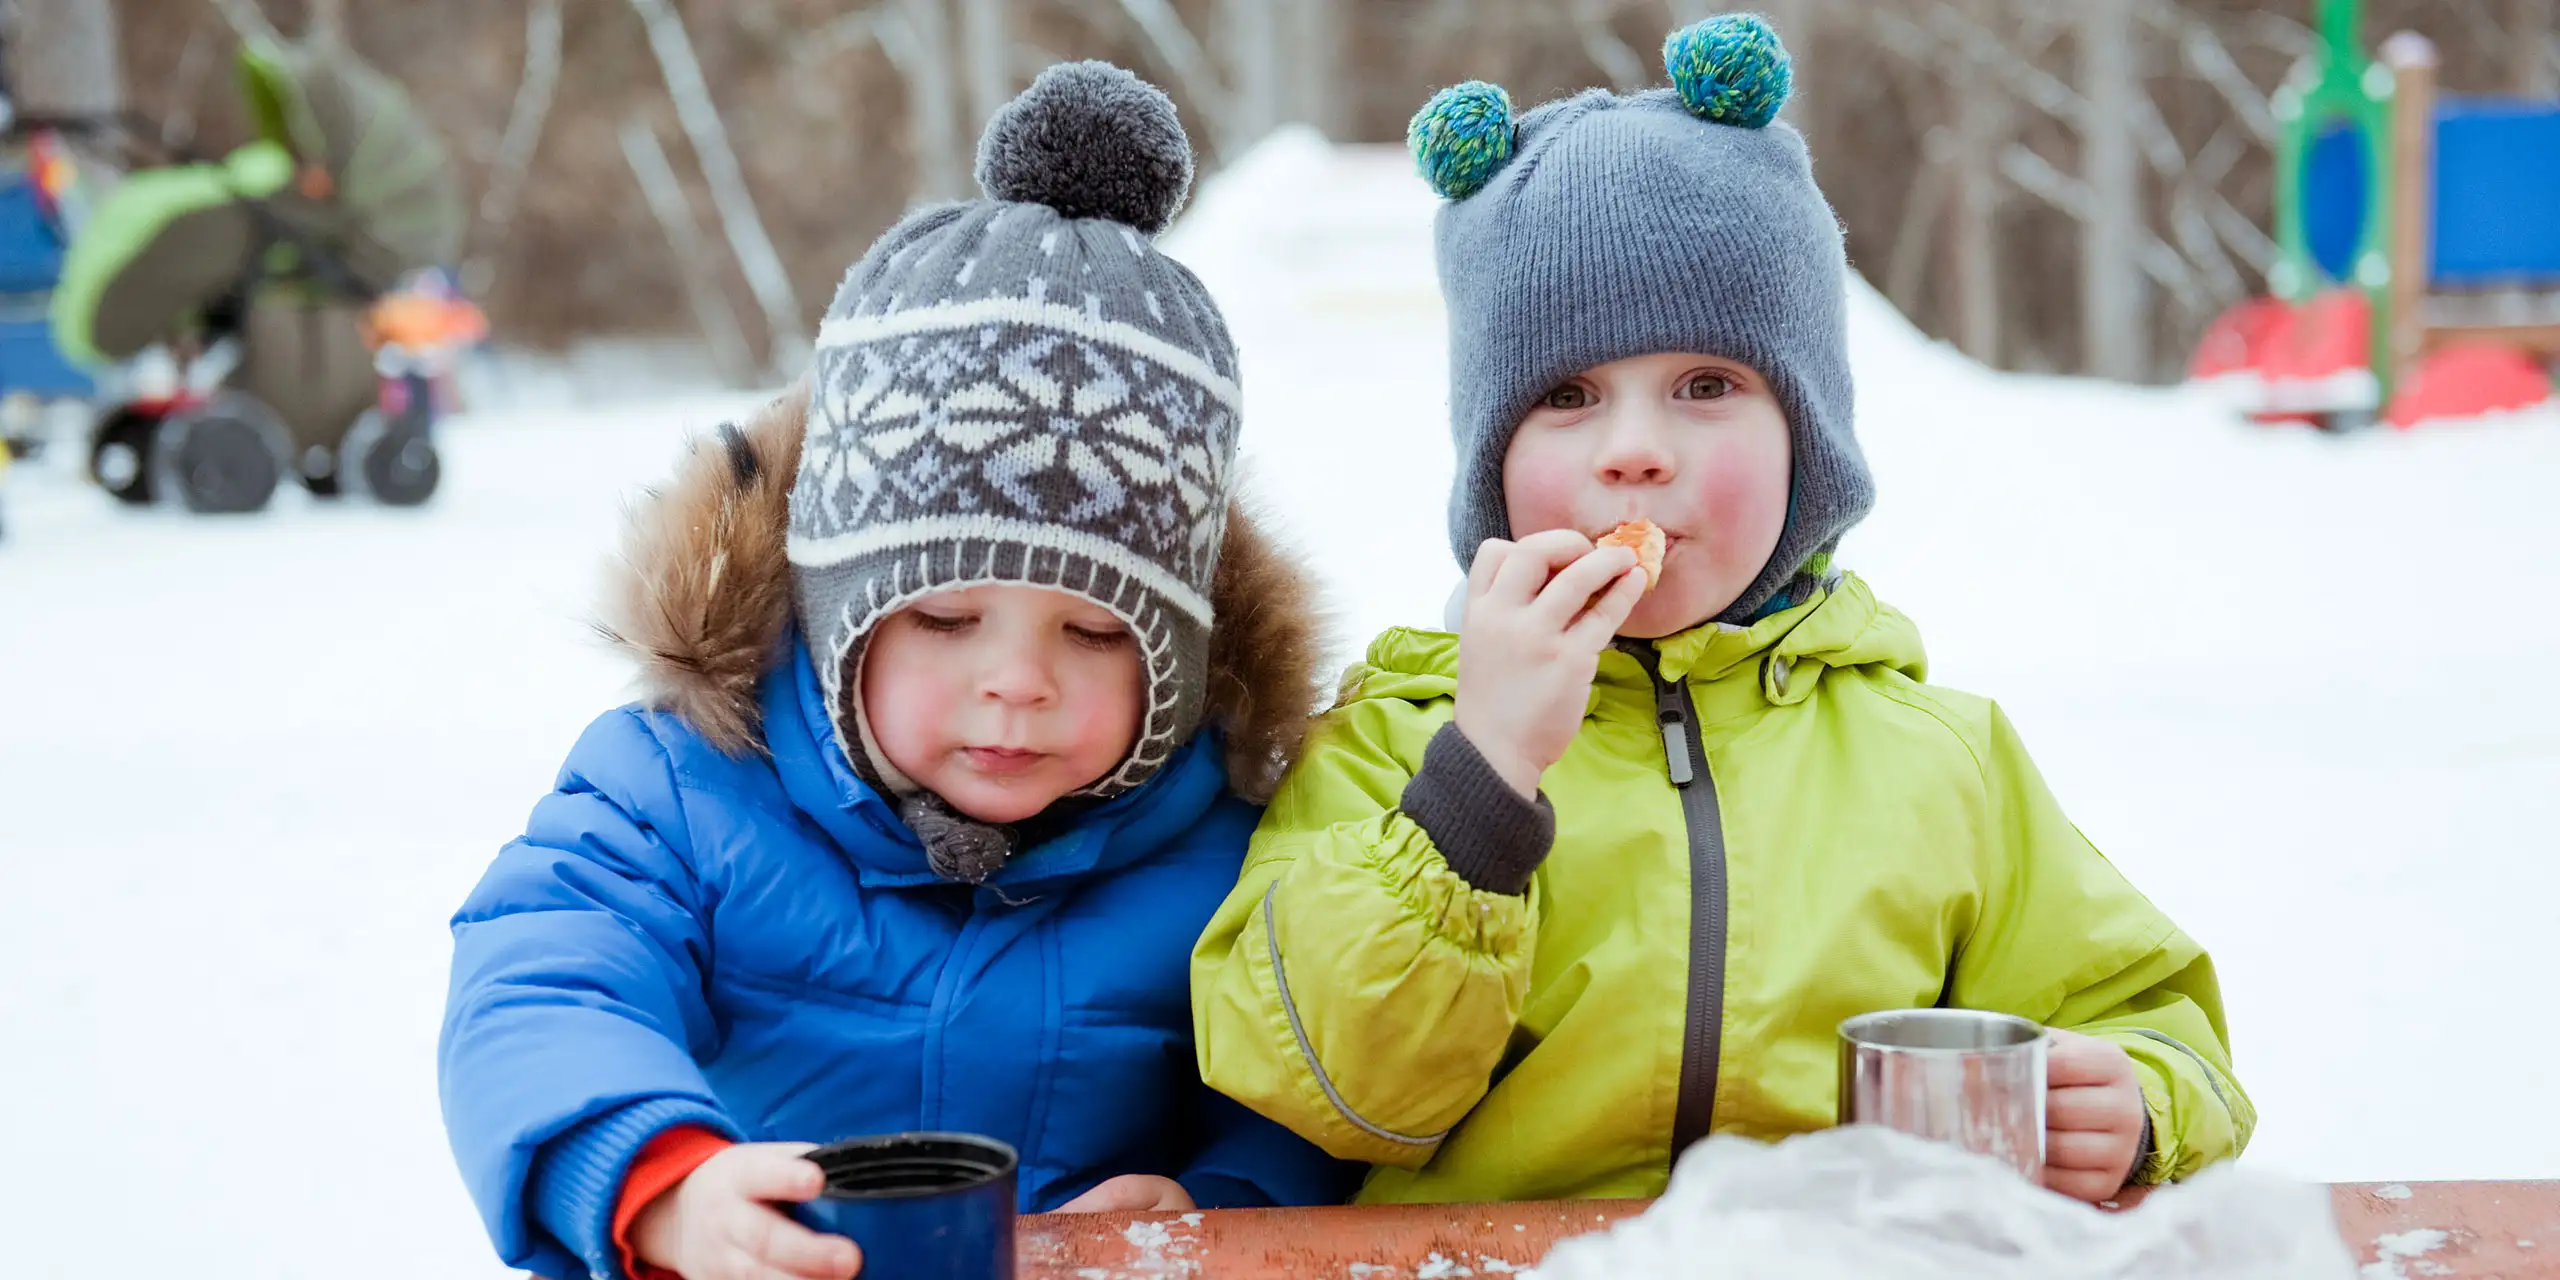 Little Boys Sipping Hot Cocoa; Courtesy of mamaza/Shutterstock.com